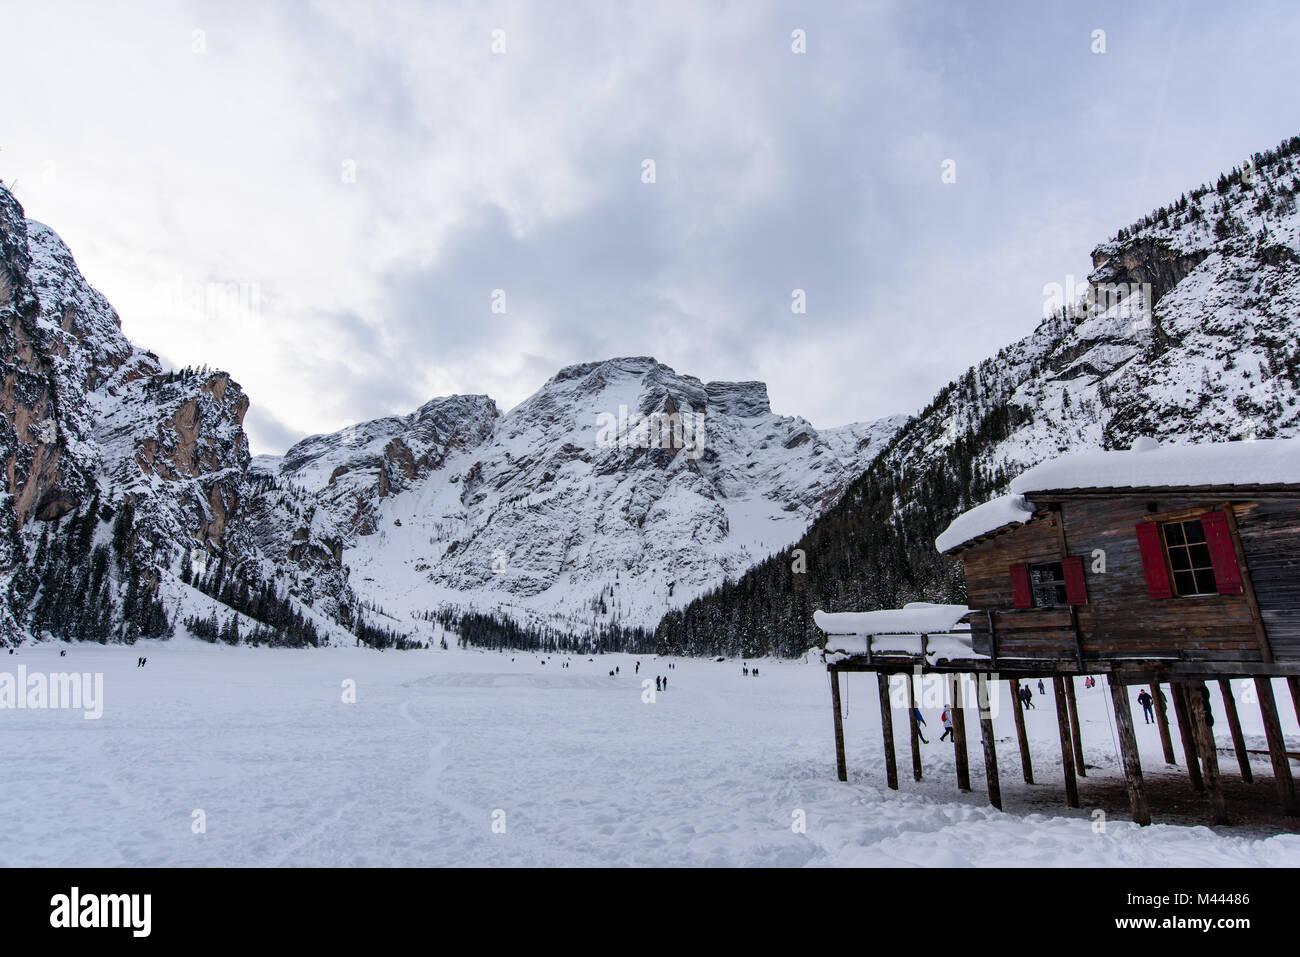 Dolomitas: Mejor época para viajar, clima en verano, nieve - Foro Italia